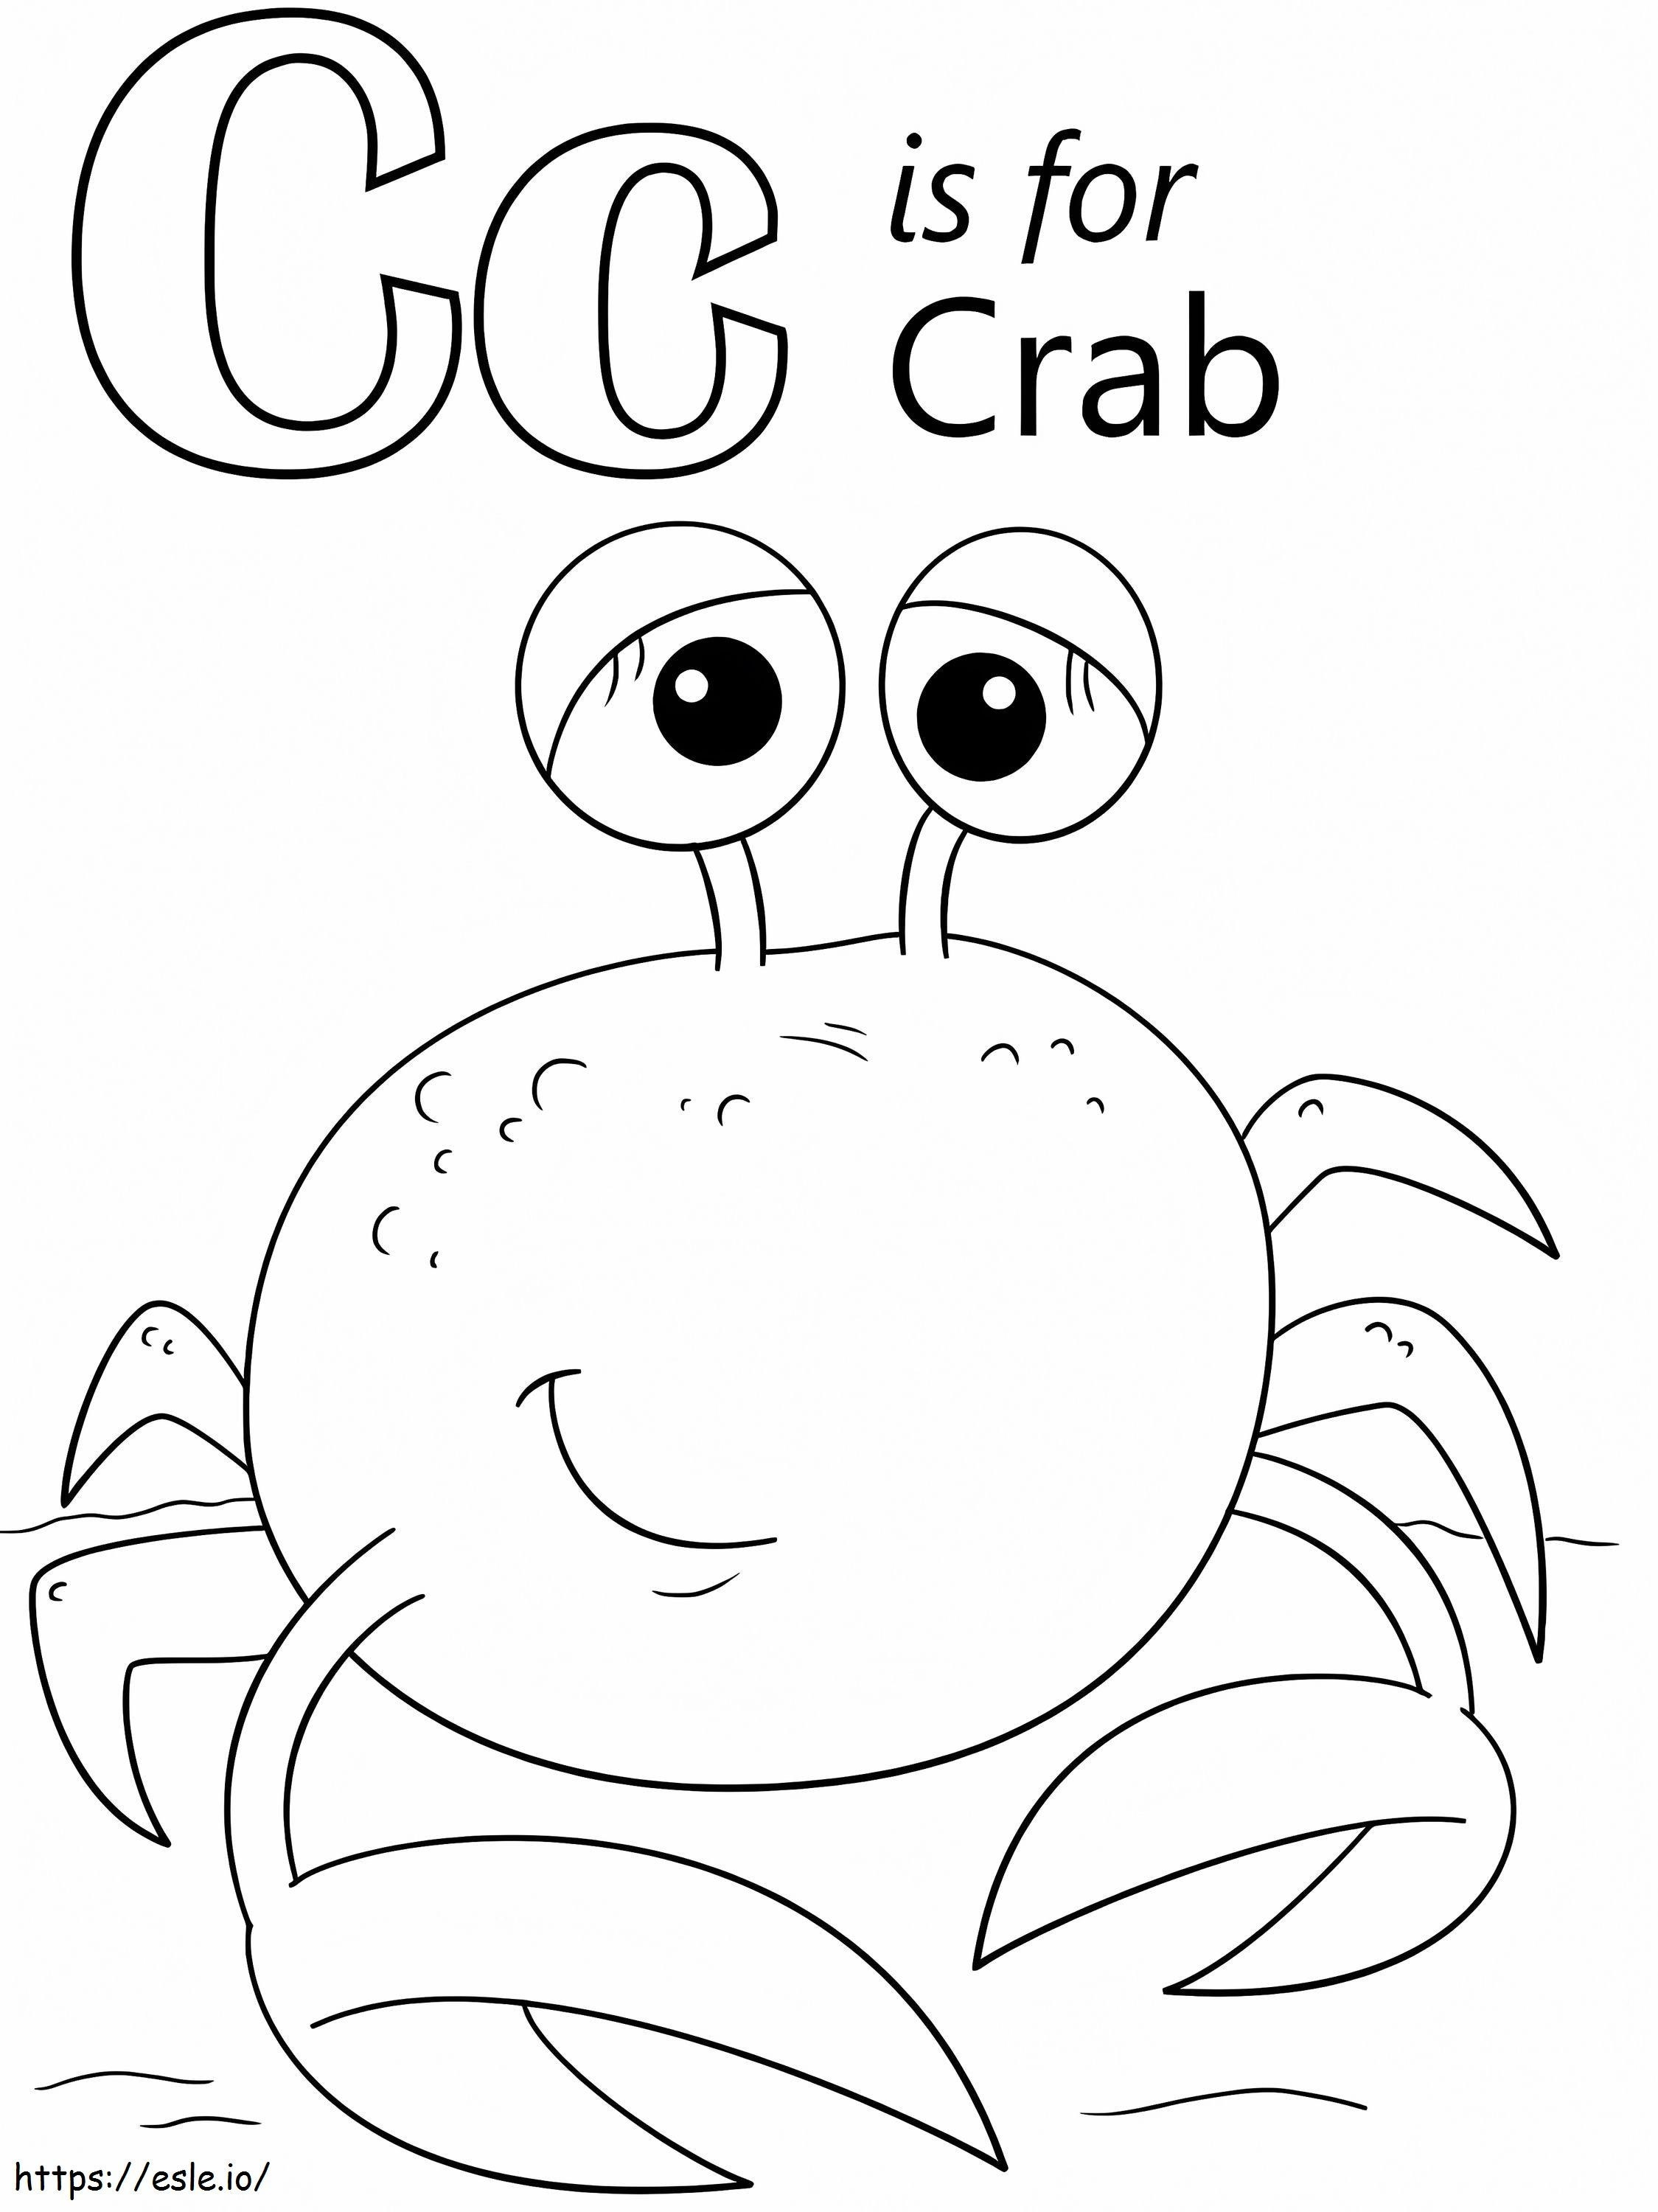 Crab litera C de colorat